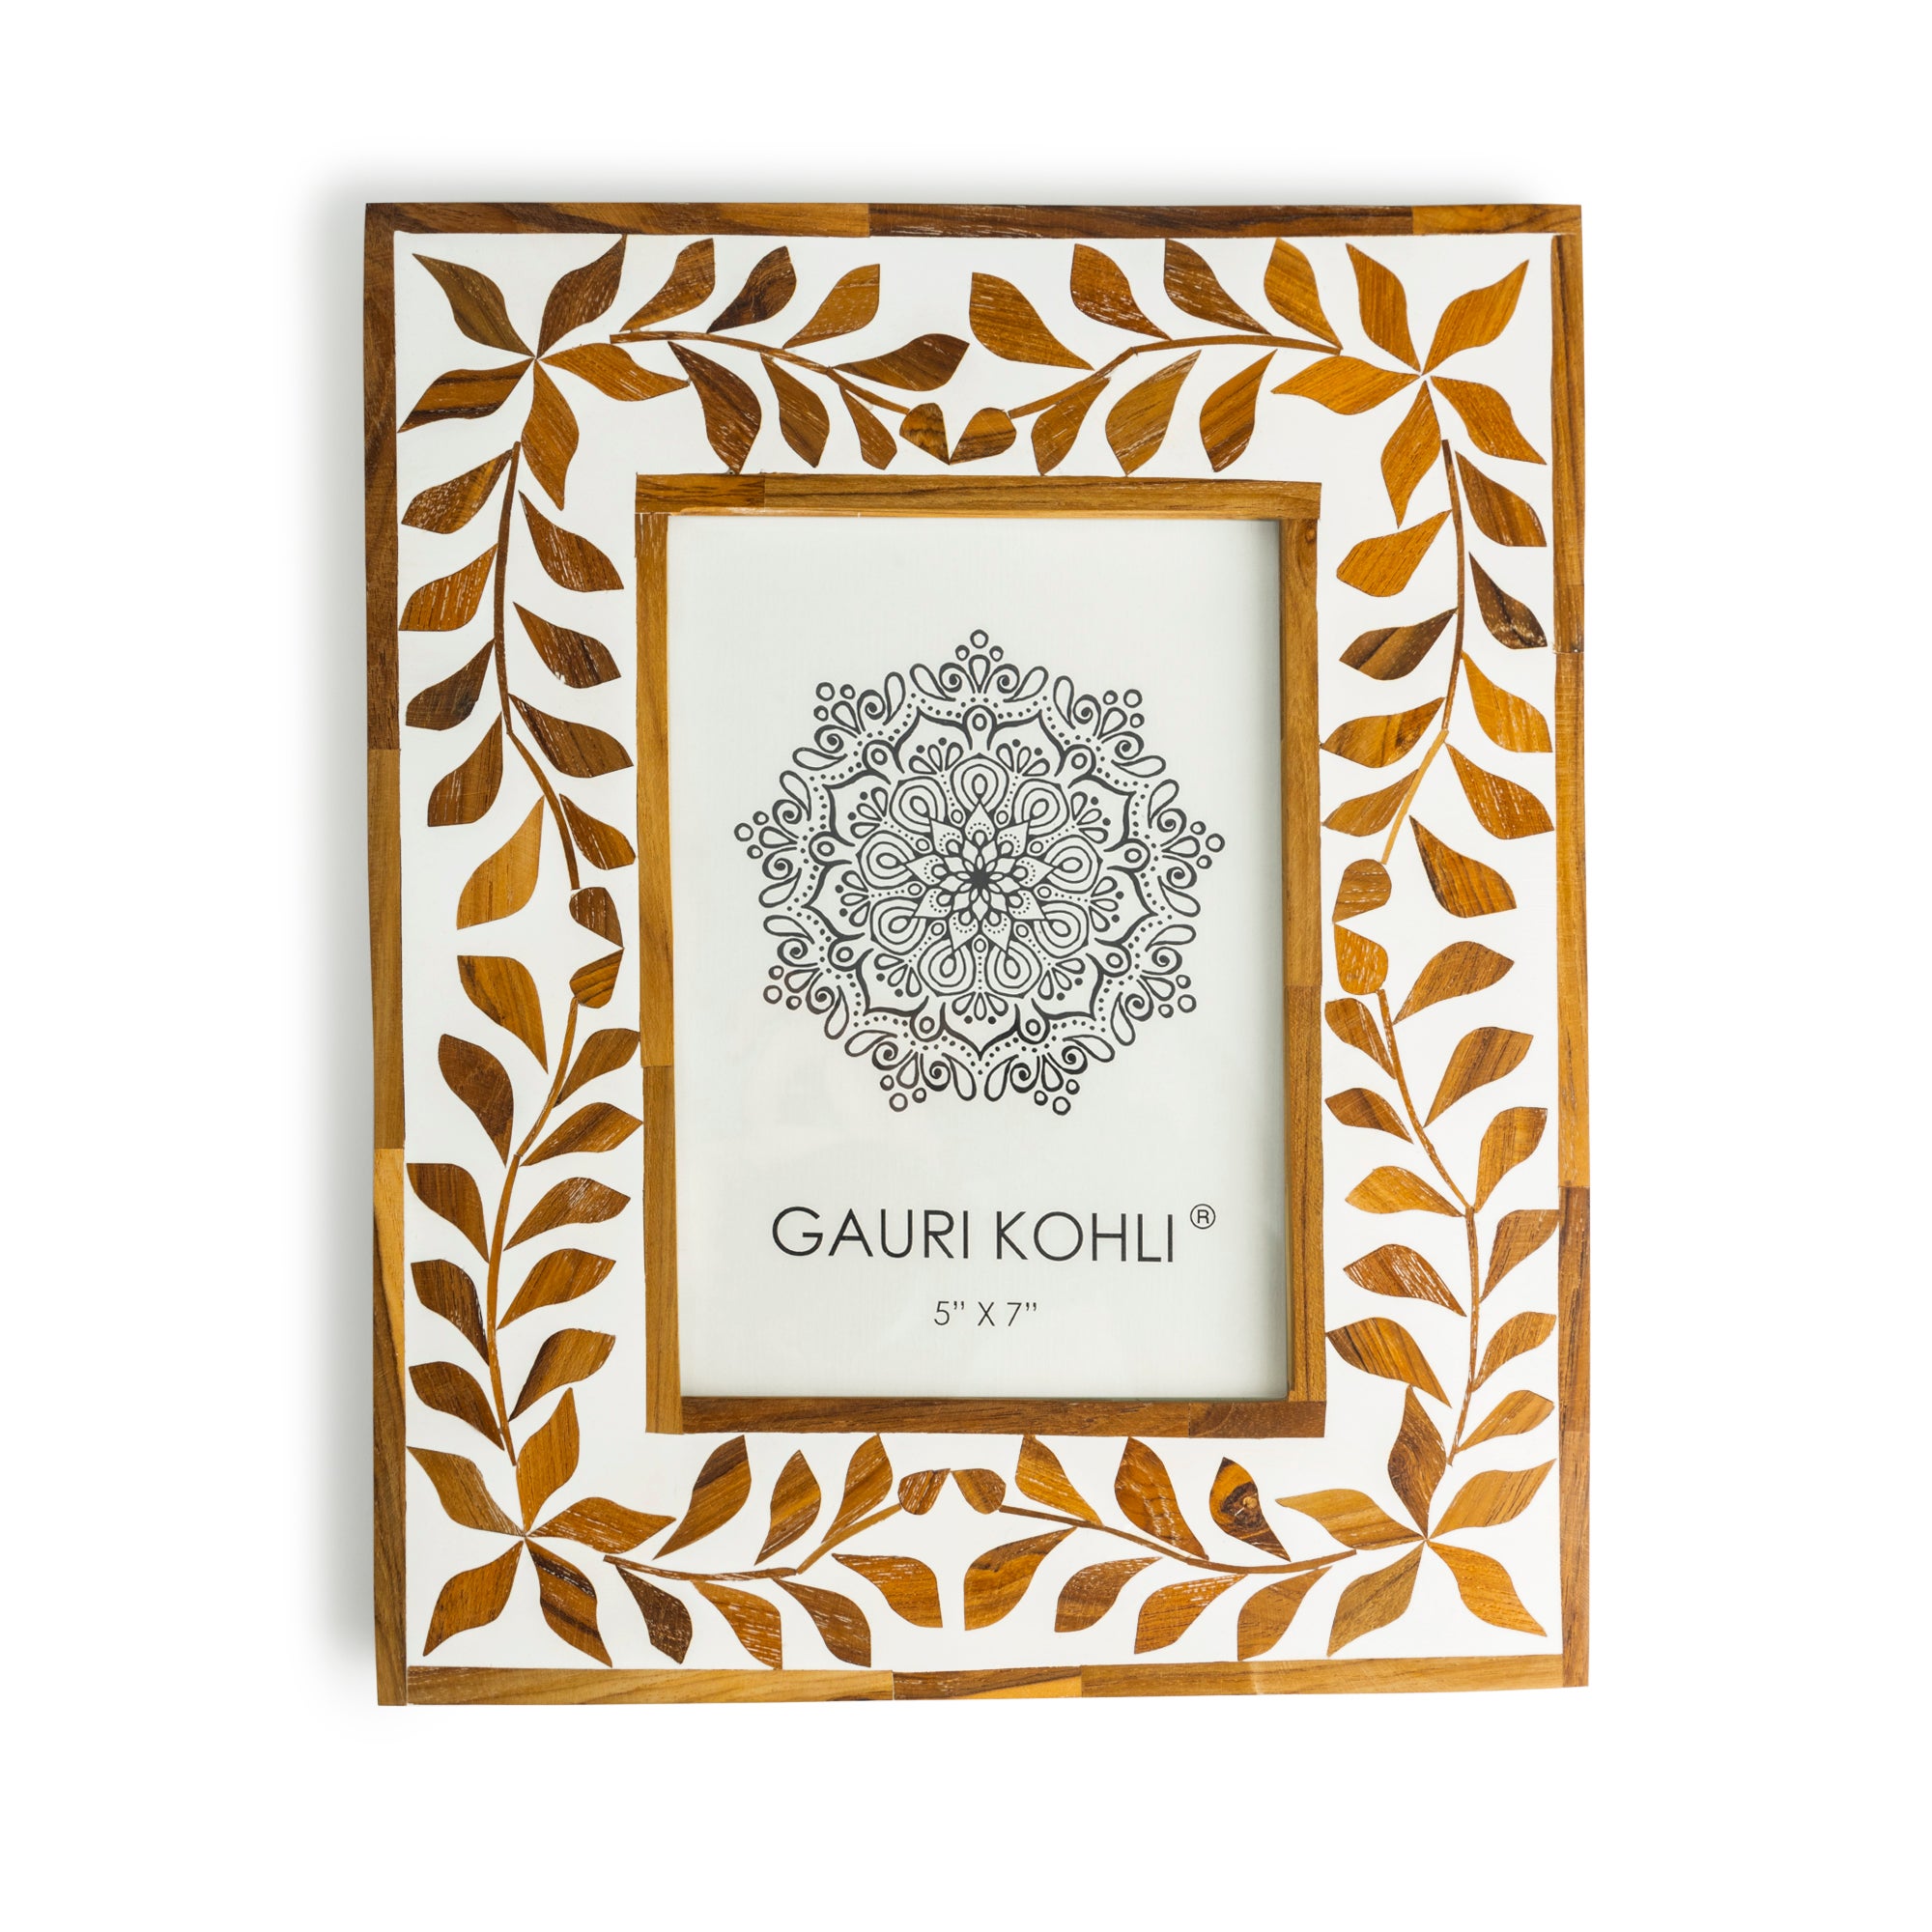 Gauri Kohli Jodhpur Wood Inlay Picture Frame, 5"x7"